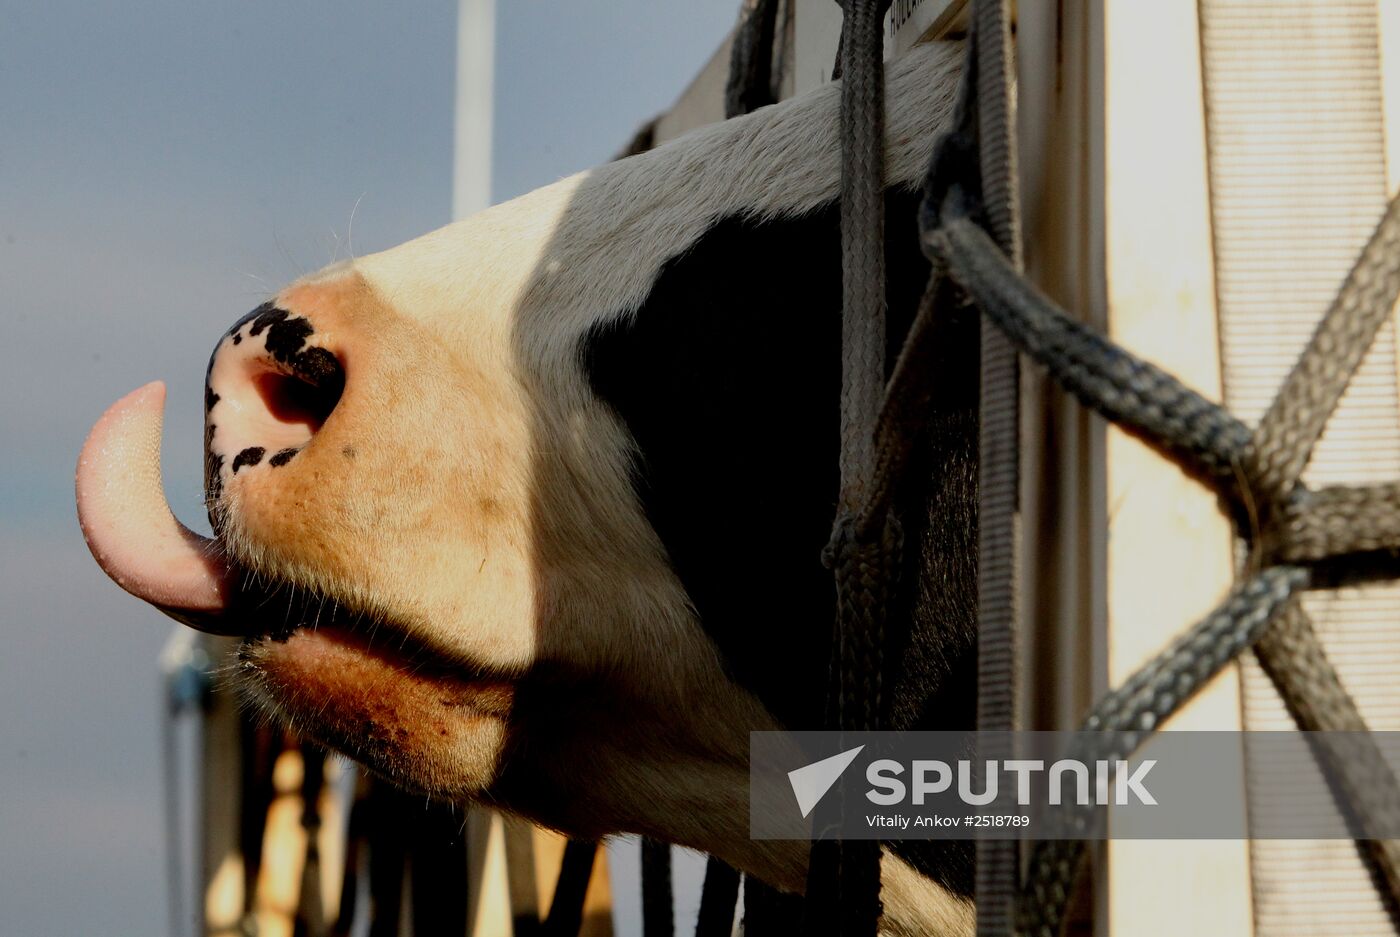 Cows from Germany arrive in Vladivostok